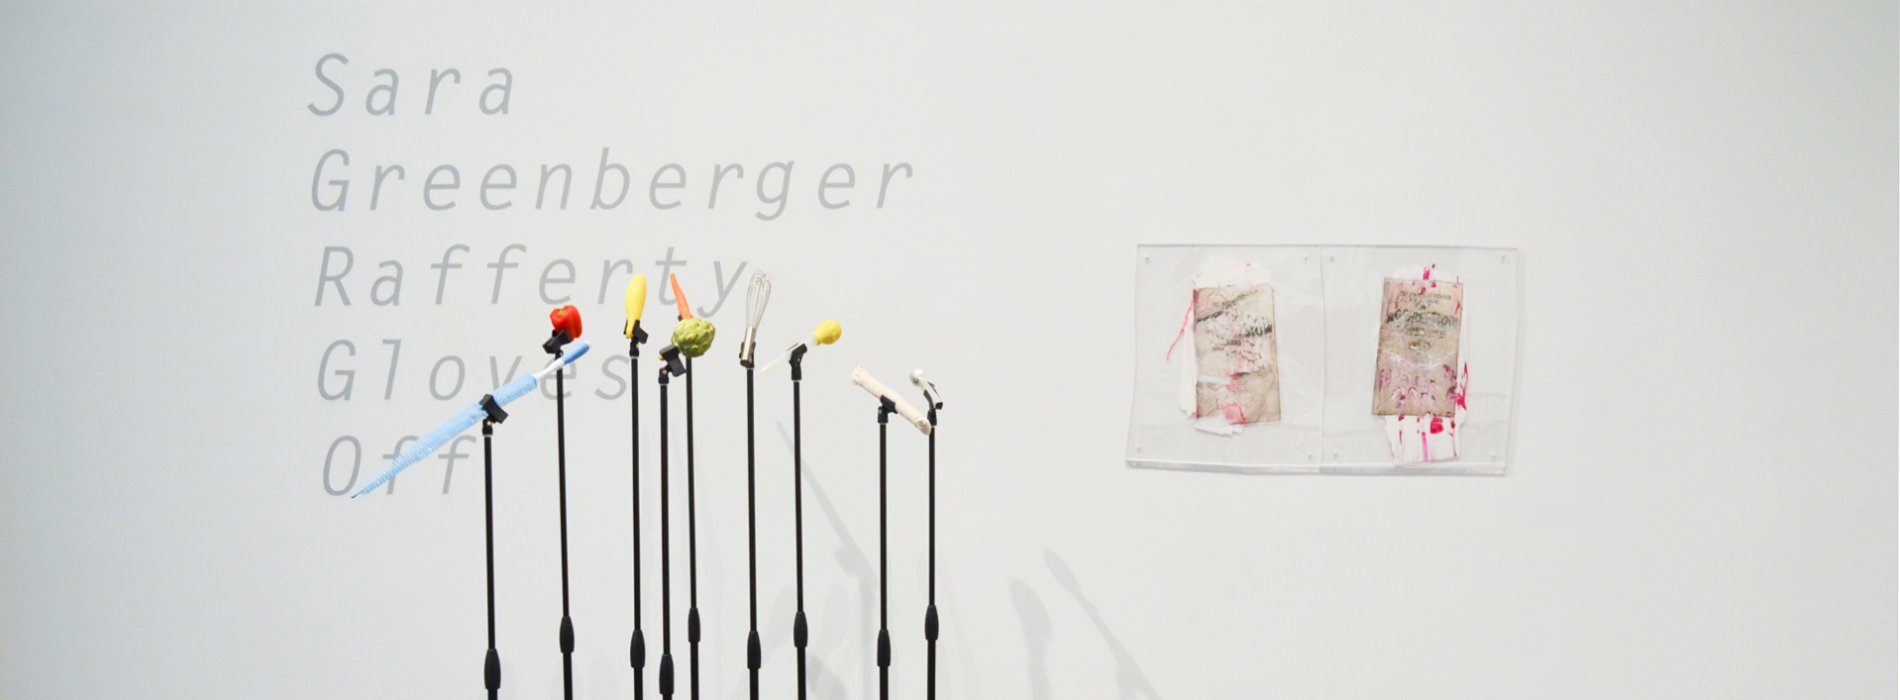 201707-Sara-Greenberger-Rafferty-installation-01-web